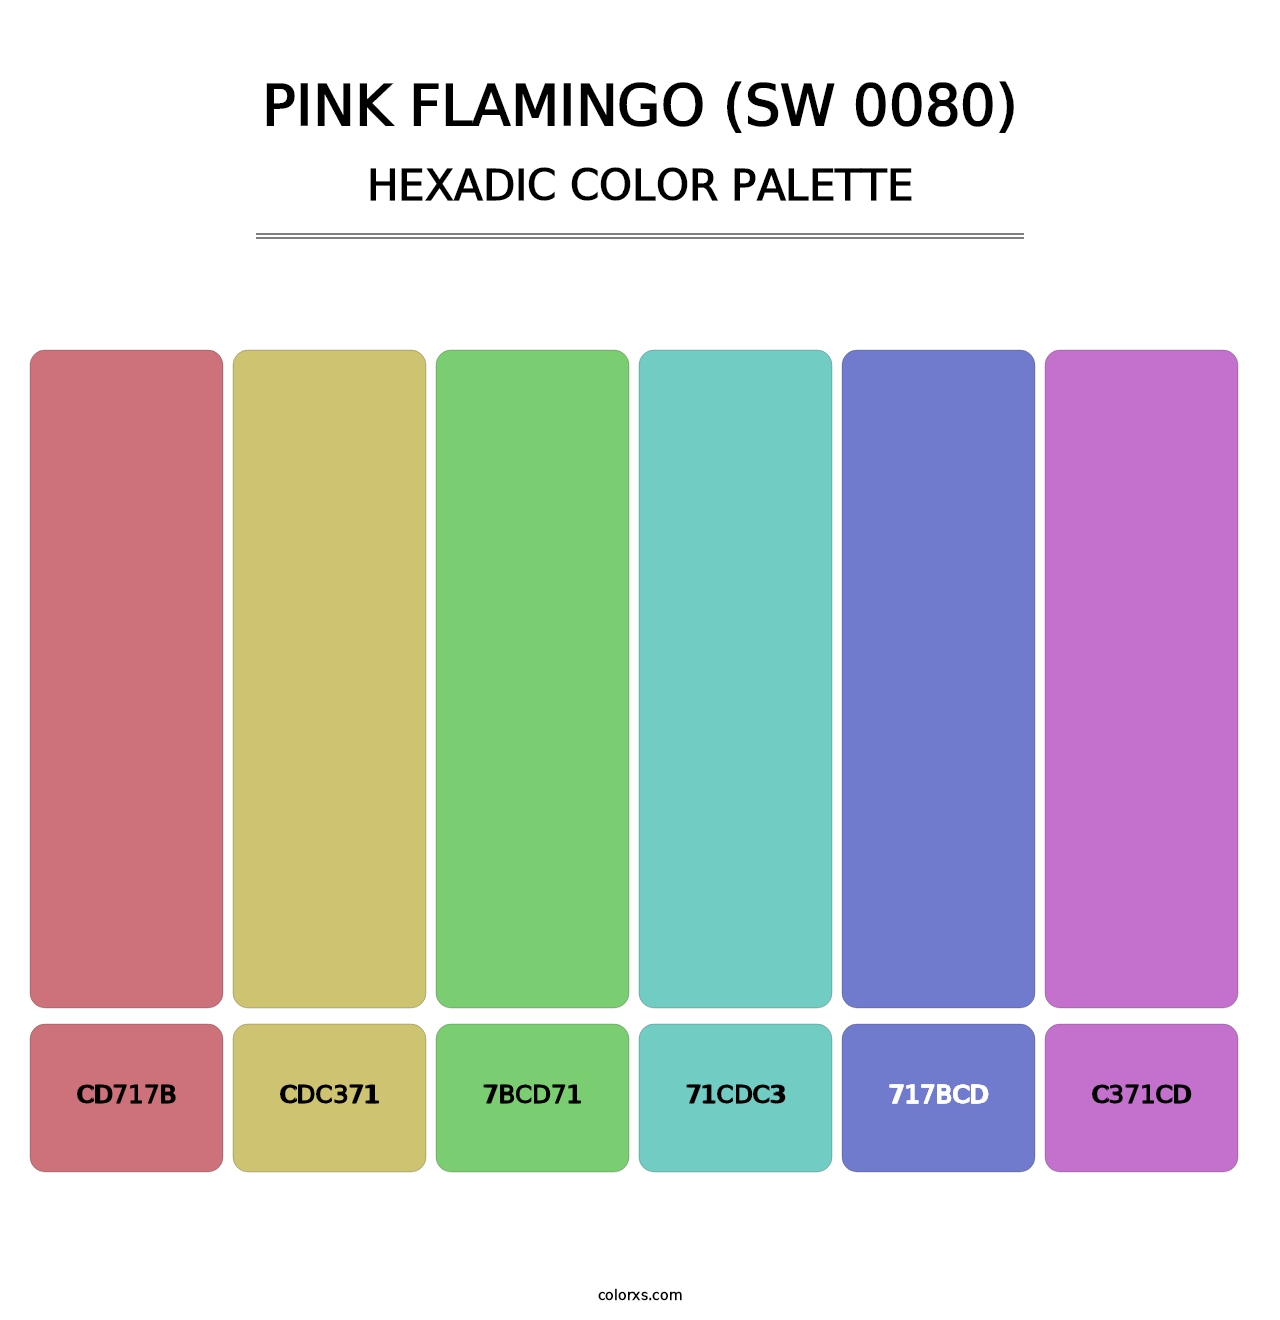 Pink Flamingo (SW 0080) - Hexadic Color Palette